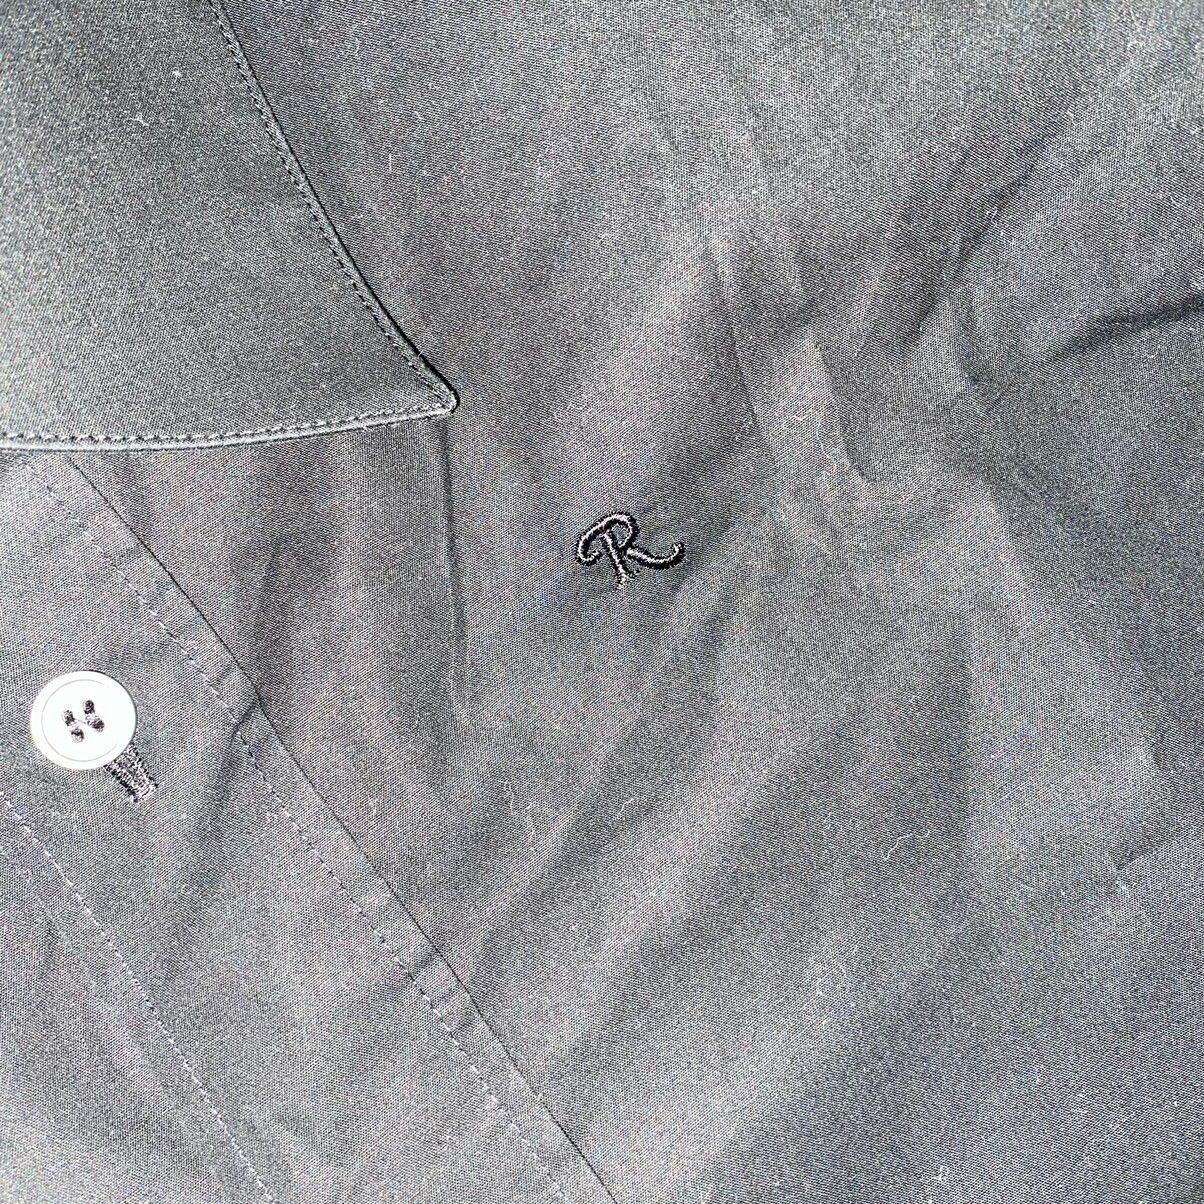 SS08 Logo Embroidery Sleeveless Ripped Tank Button Up Shirt - 2